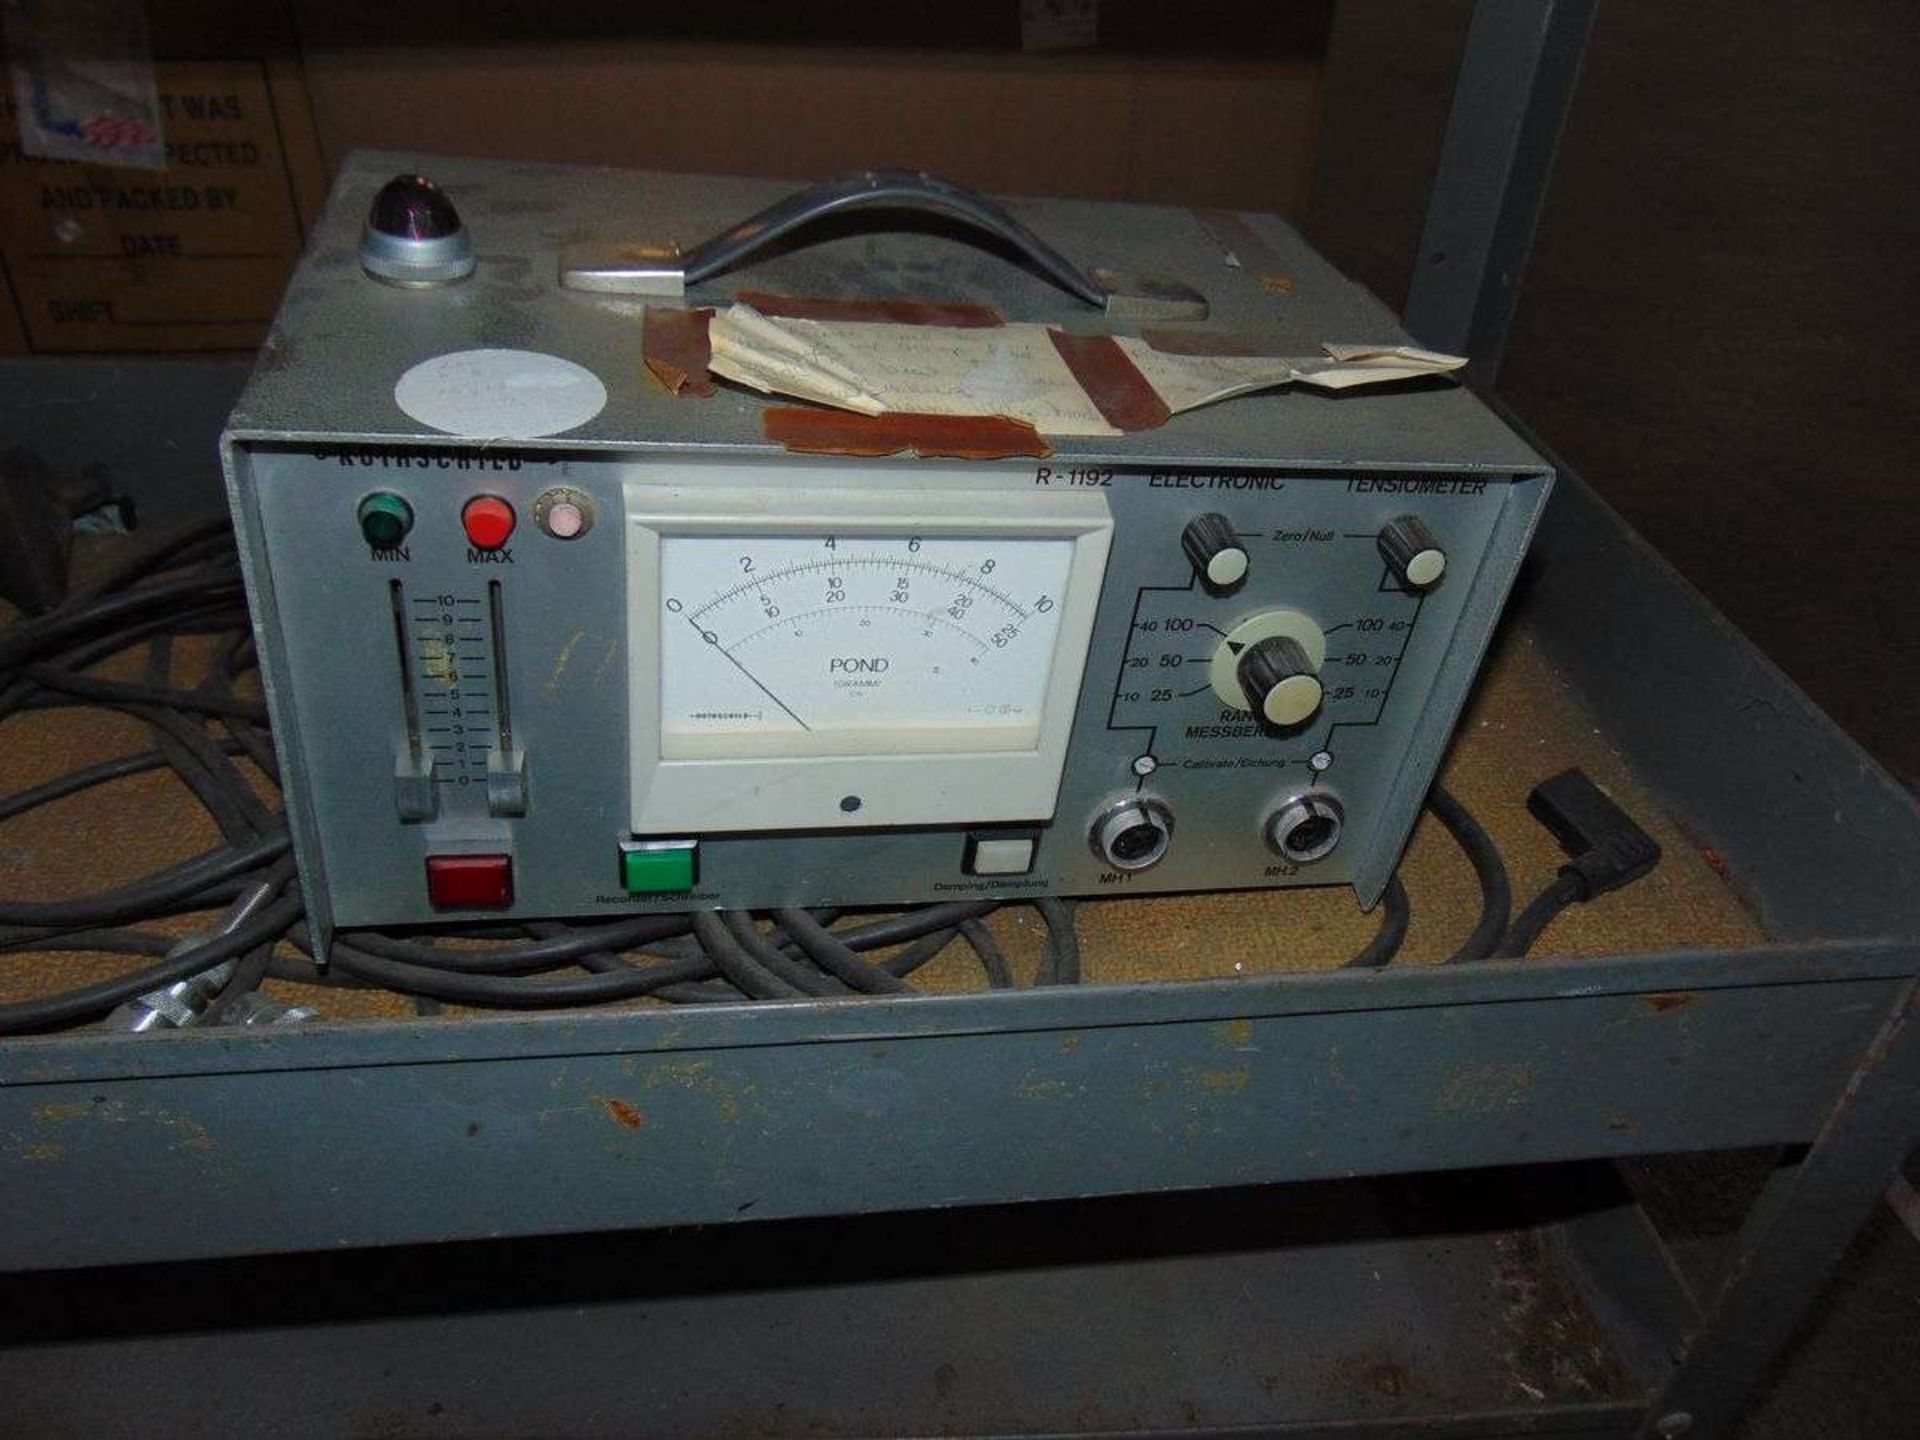 Rothschild Tensiometer Test Equipment - Image 2 of 4